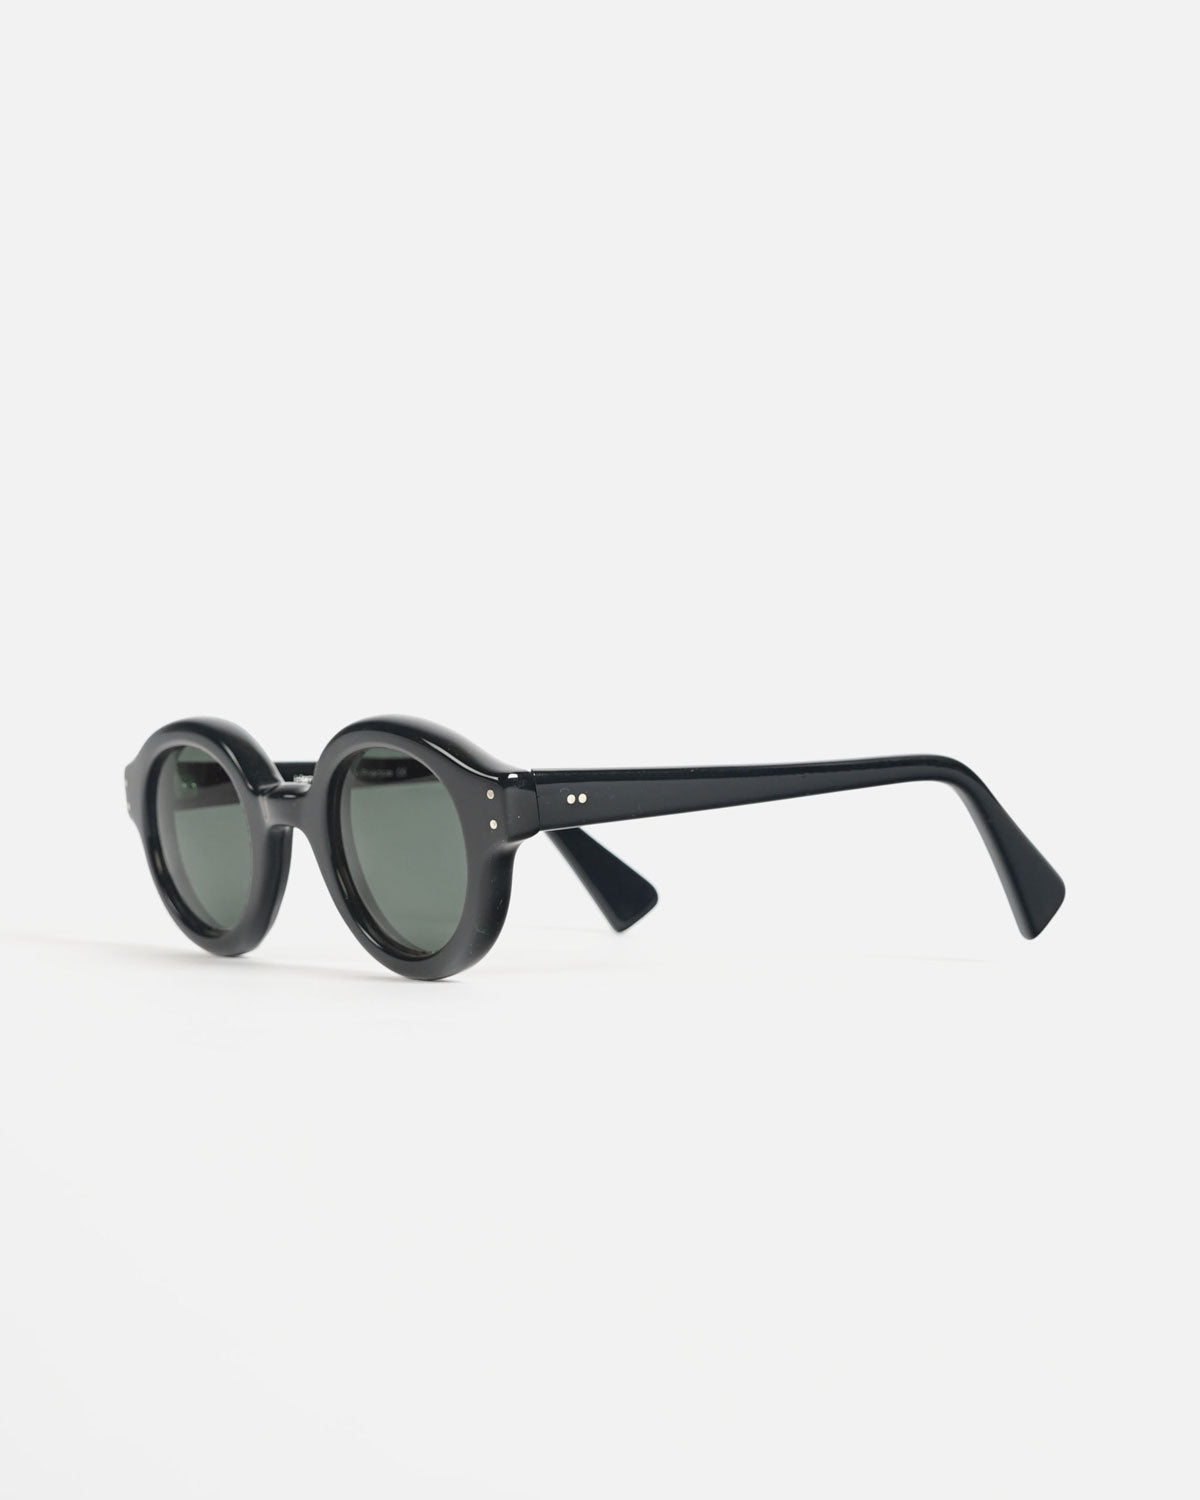 BAUBAU Sunglasses Black